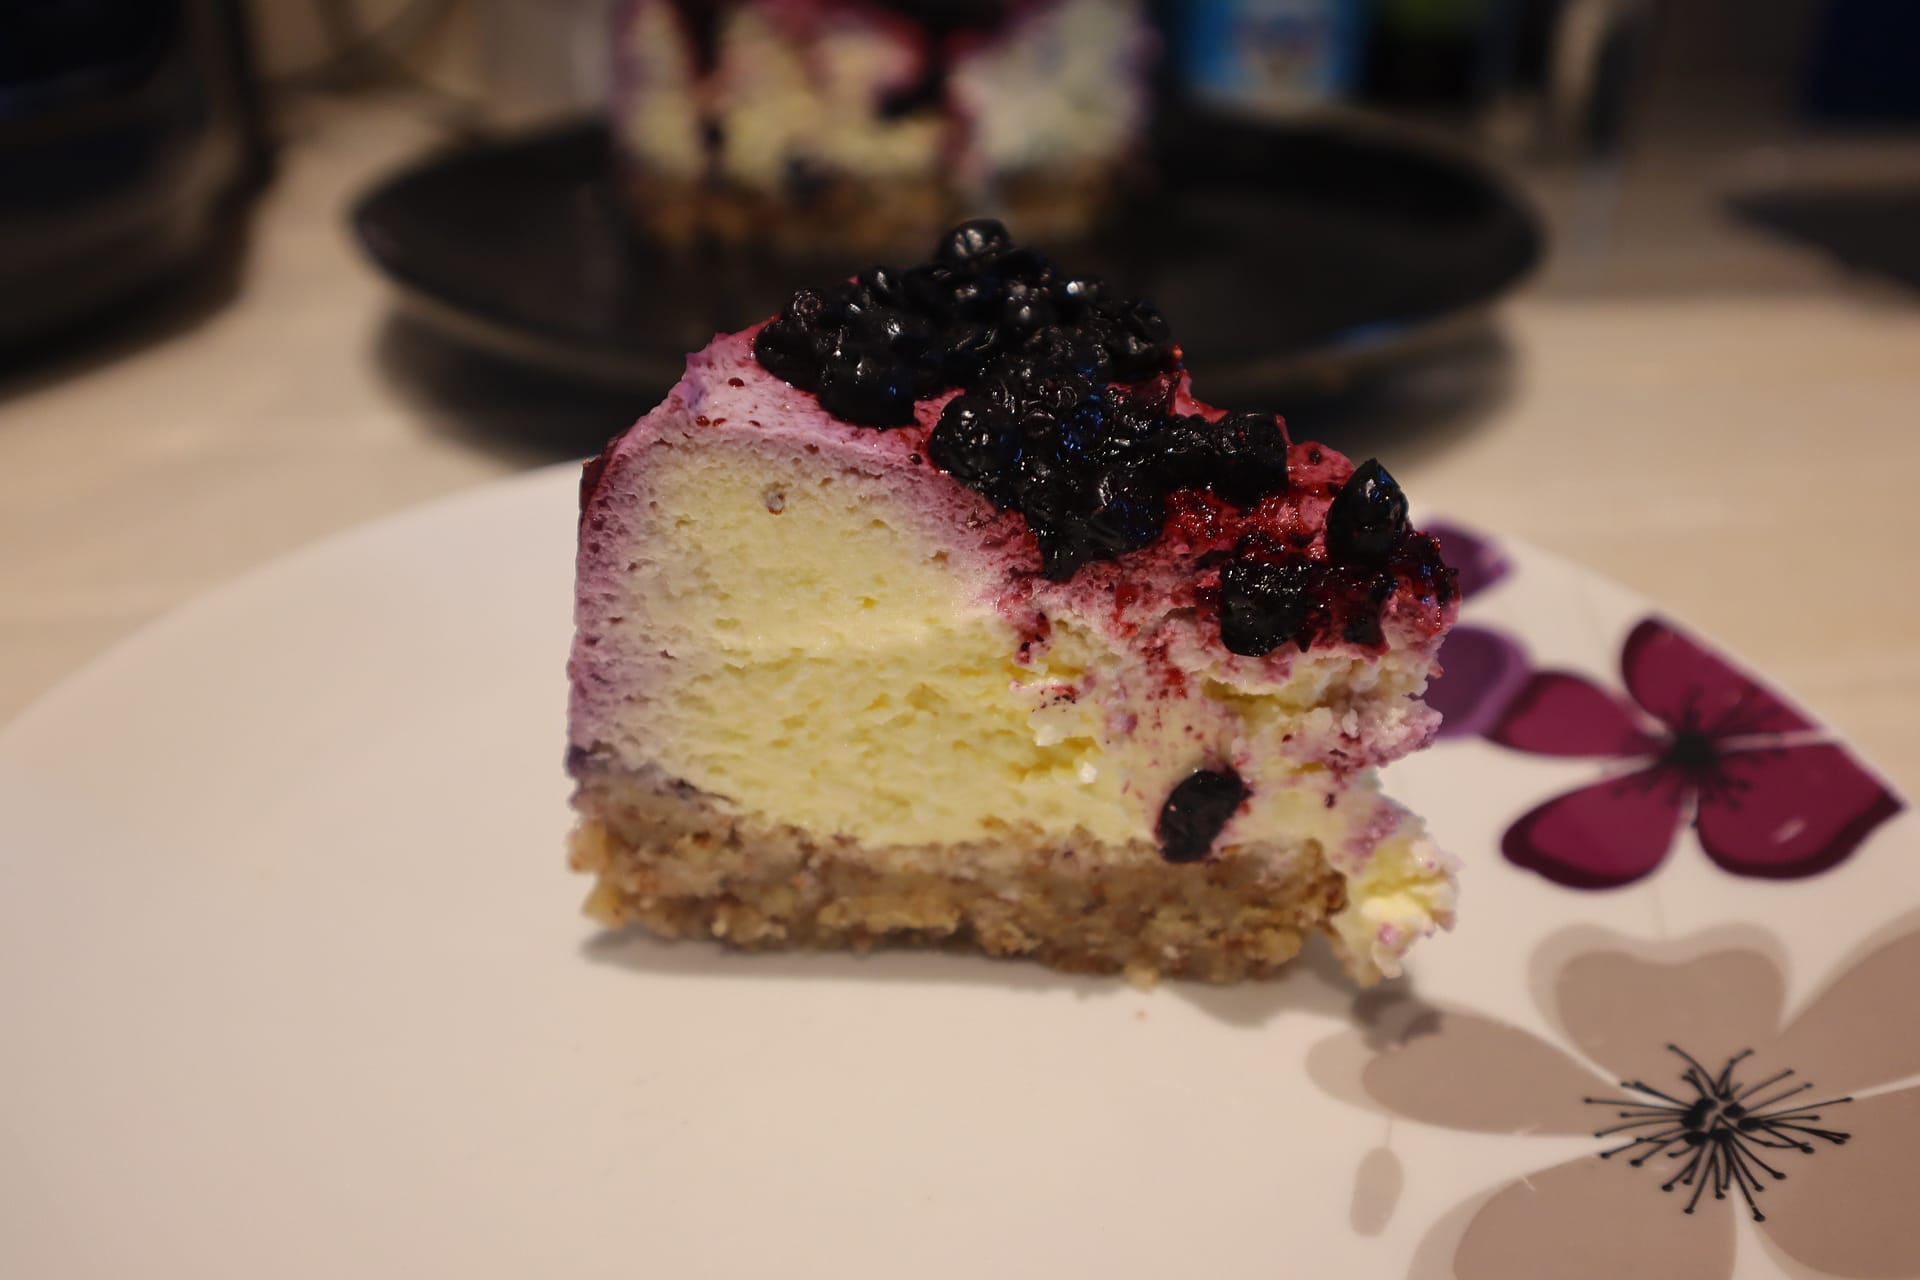 Keto Cheesecake Recipe - The best ninja foodi, instant pot or oven keto blueberry cheesecake recipe.